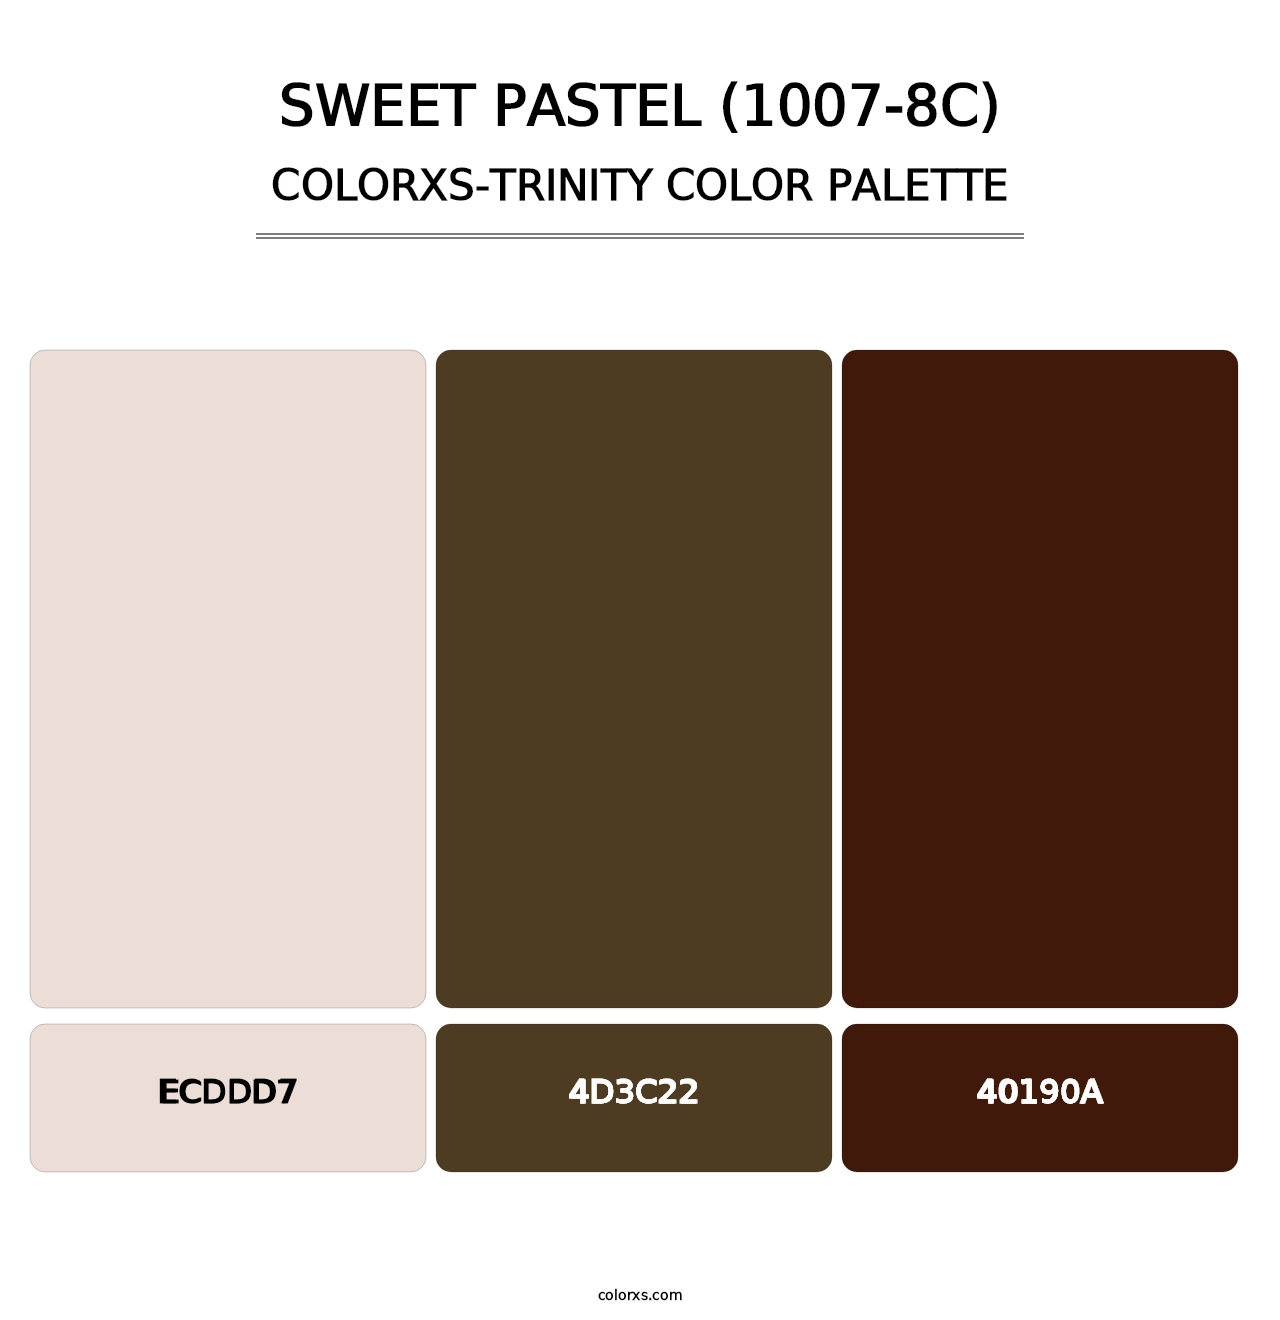 Sweet Pastel (1007-8C) - Colorxs Trinity Palette